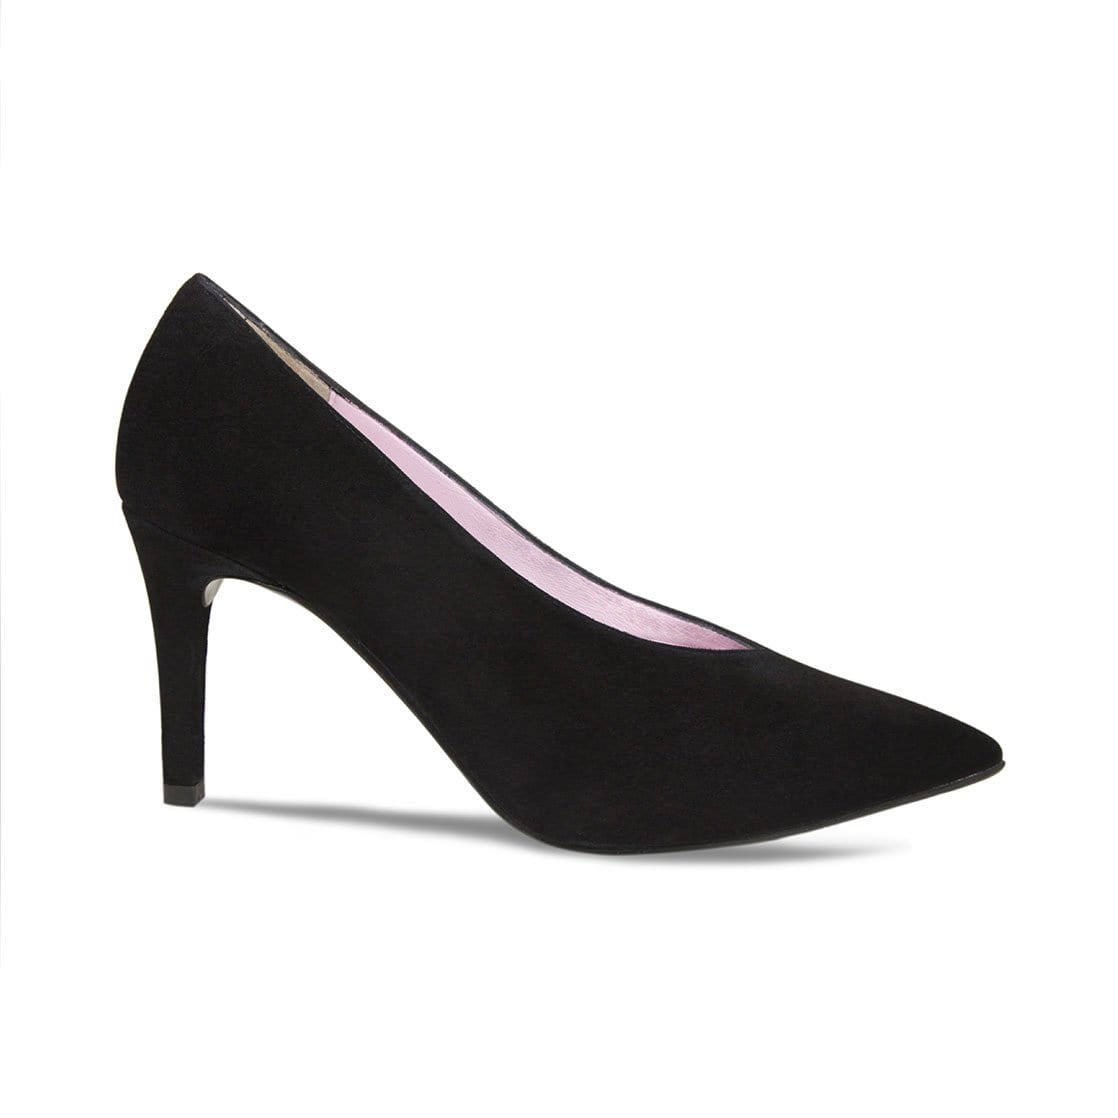 HSMQHJWE Strappy High Heels 4 Inch Wedge Sandals Women's Ankle Strap High  Heels Open Toe Pump Heeled Sandals Shoes Black,8) - Walmart.com